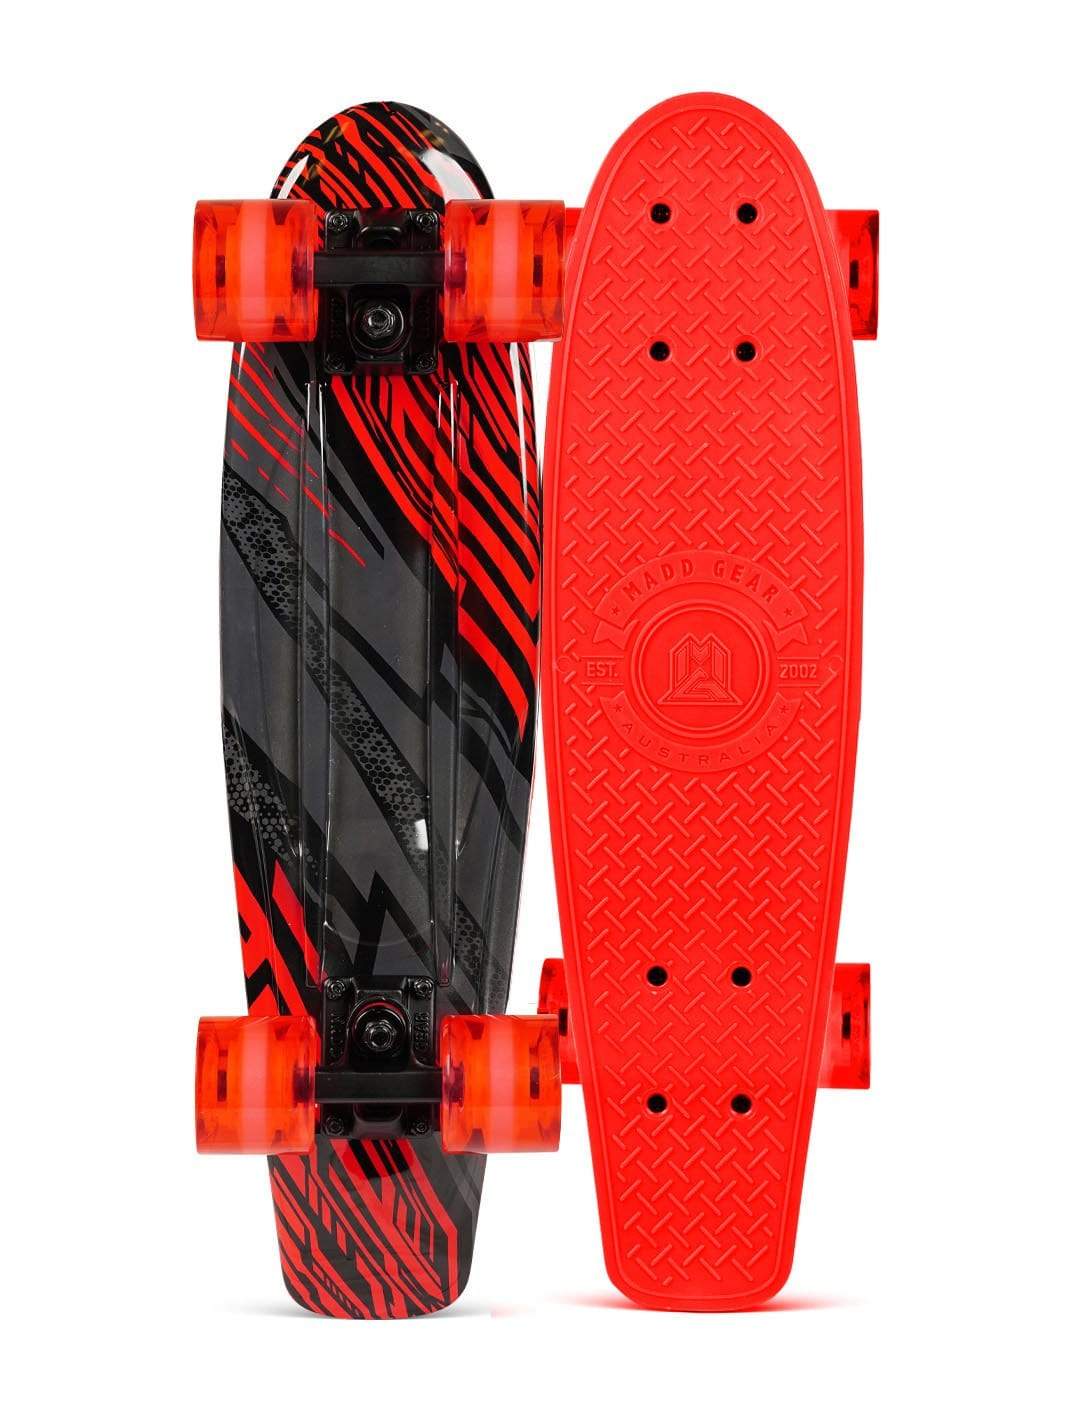 Madd Gear Retro Board Skateboard Penny 22" Plastic Flexible Kids Children Complete High Quality Black Red